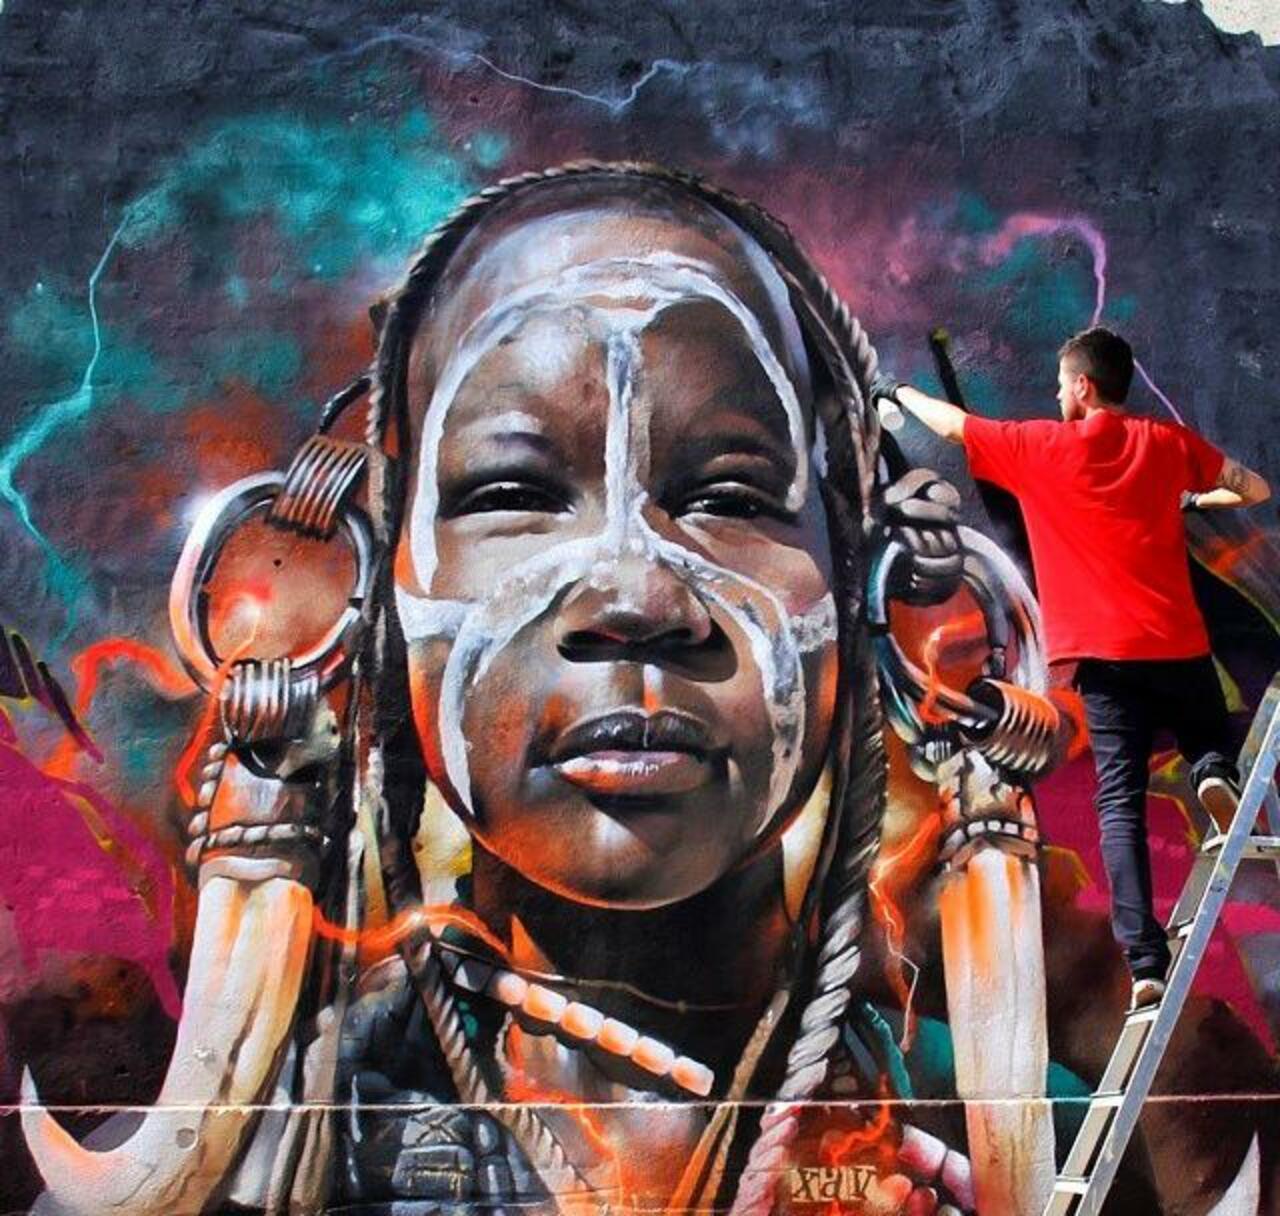 Latest Street Art by the talented - XAV  

#art #arte #graffiti #streetart http://t.co/eXSO4kIu11